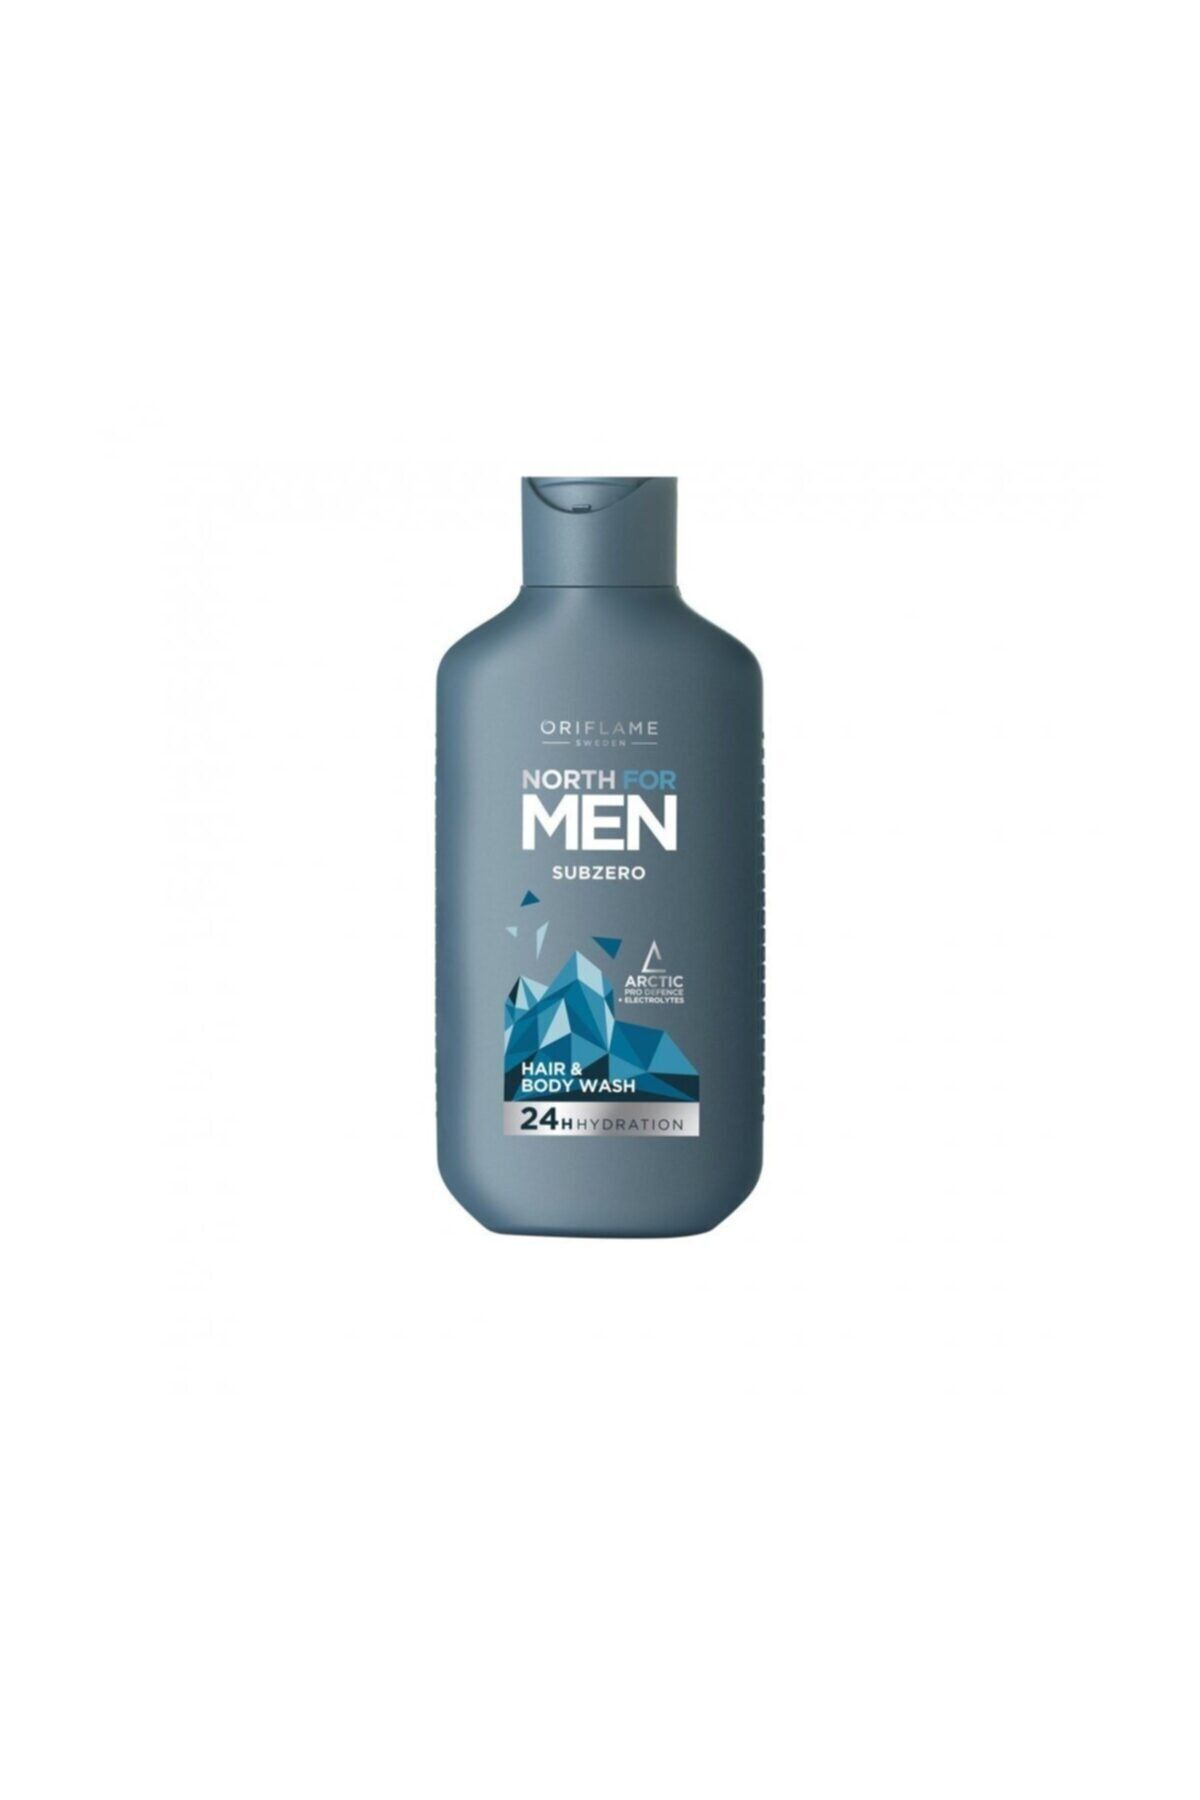 Oriflame North For Men Subzera Saç Ve Vücut Şampuanı